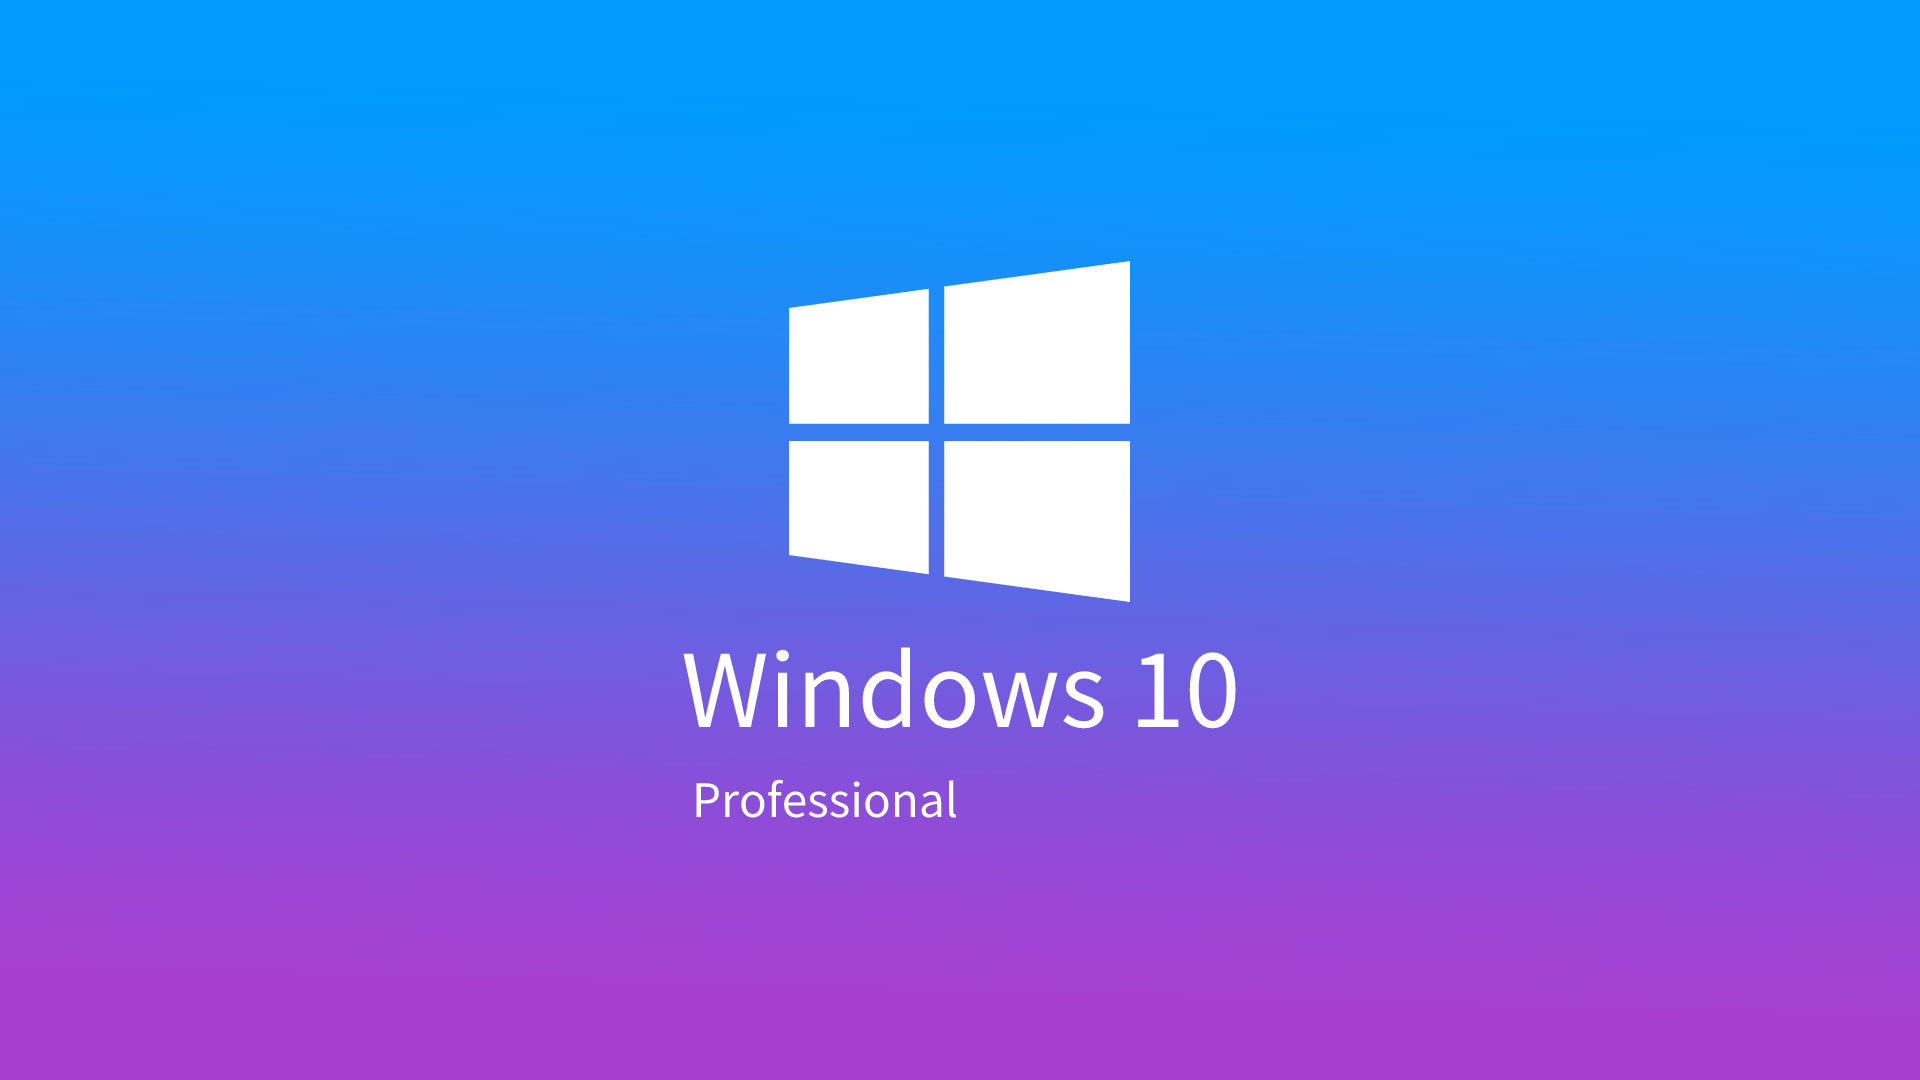 Windows 10 list. Microsoft Windows 10 Pro. Виндовс 10 профессионал. ОС Microsoft Windows 10. Windows 10 Education.